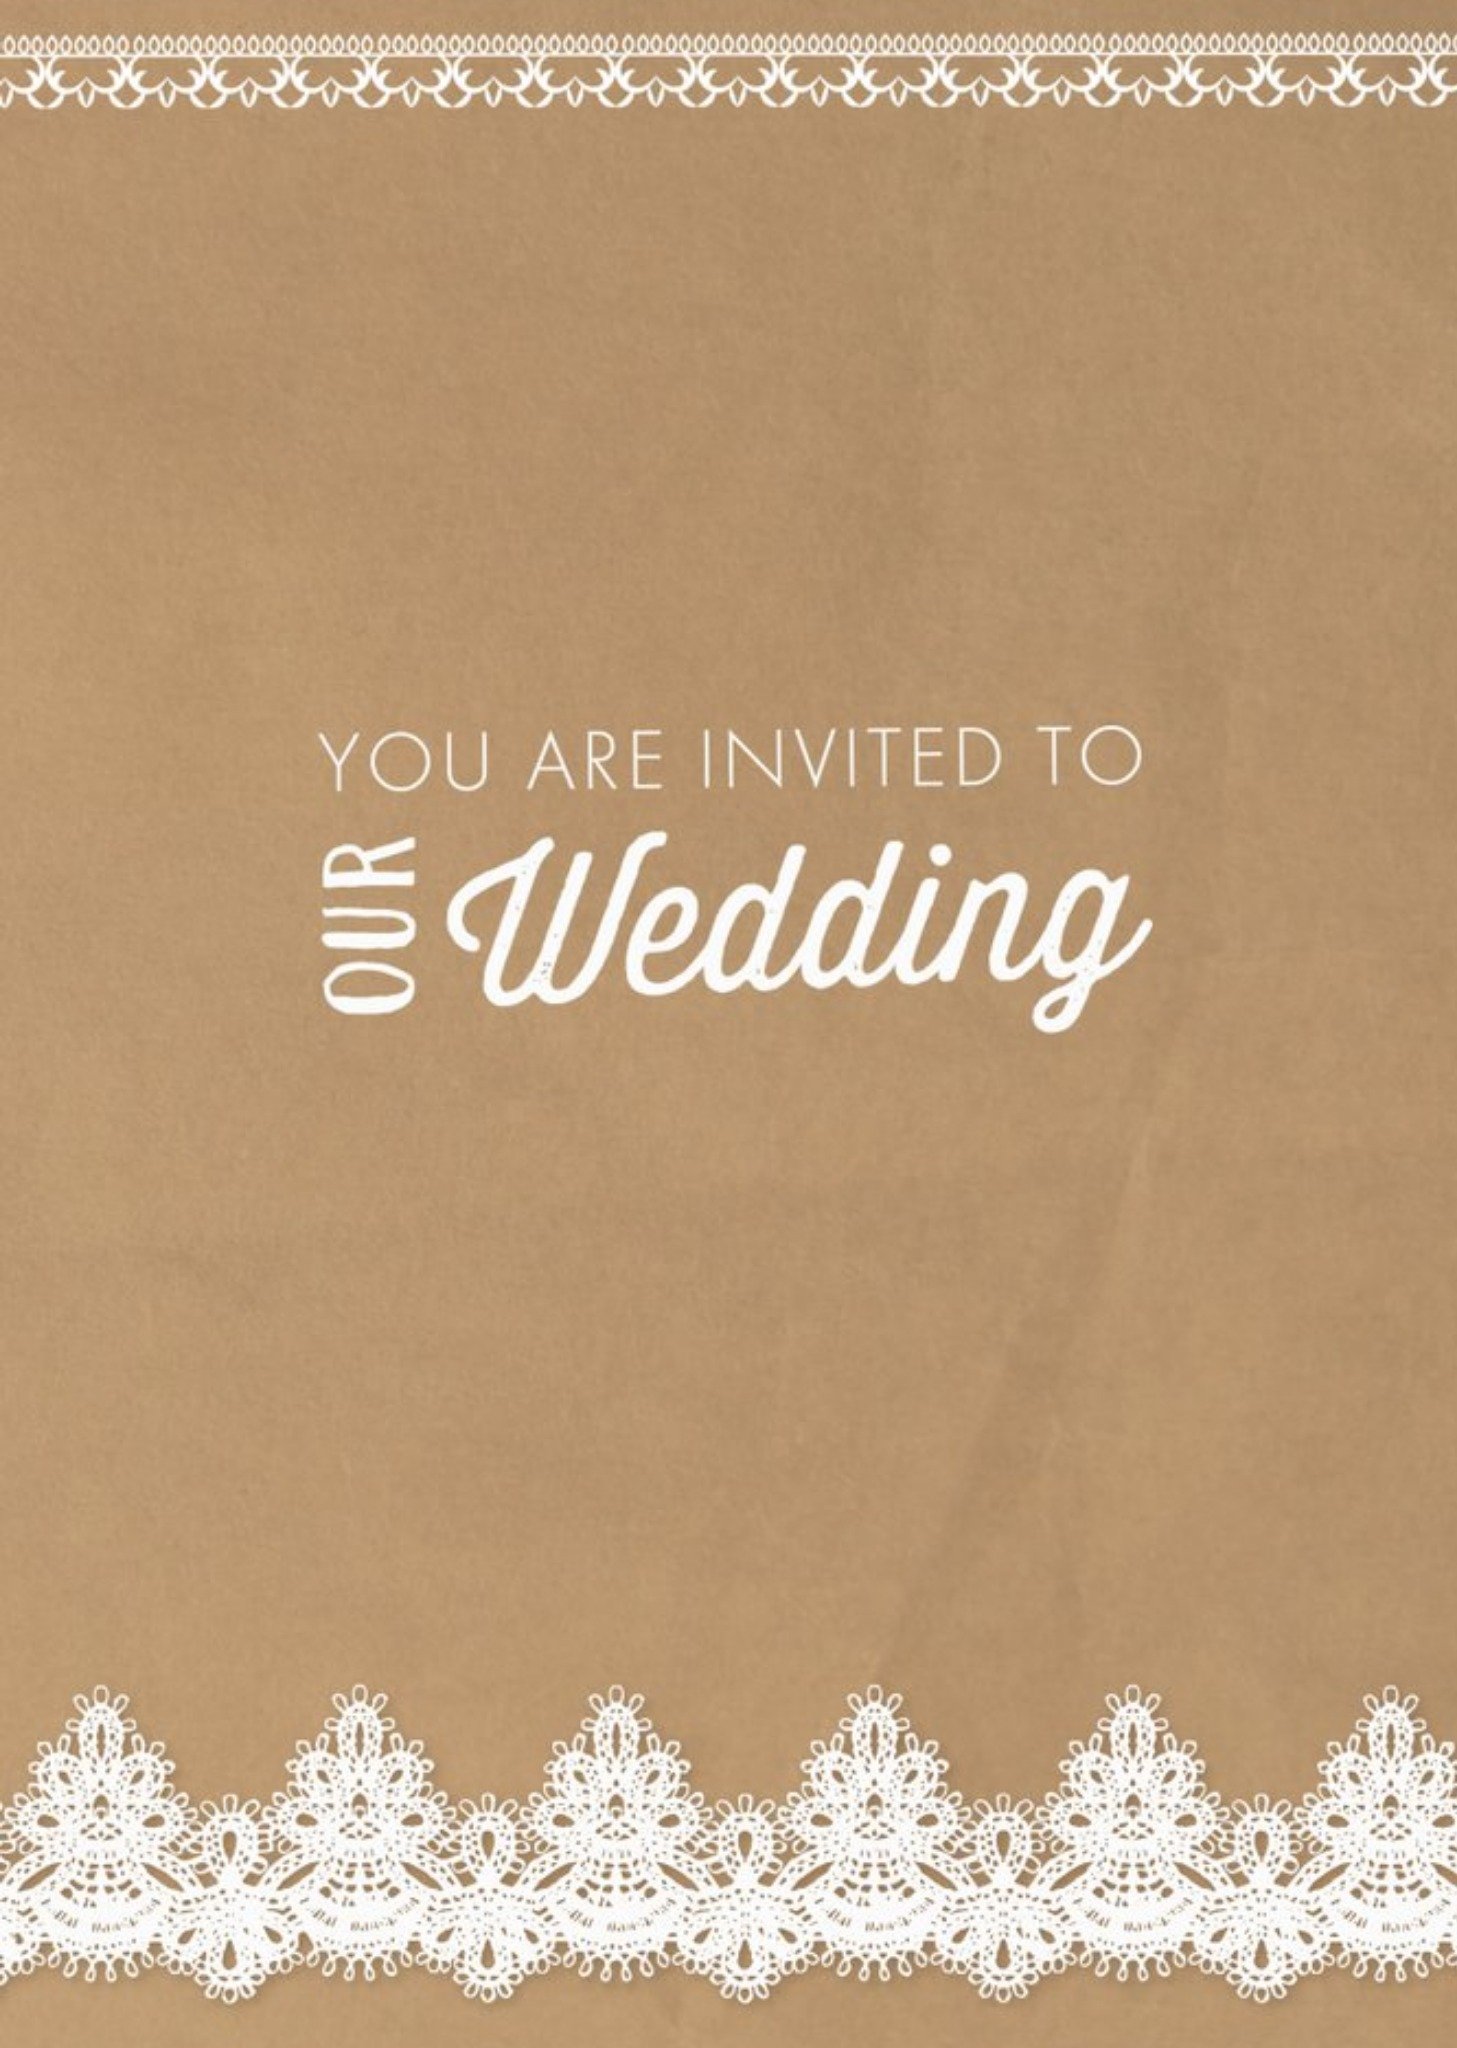 Moonpig Lace Doily Pattern Wedding Invitation, Standard Card